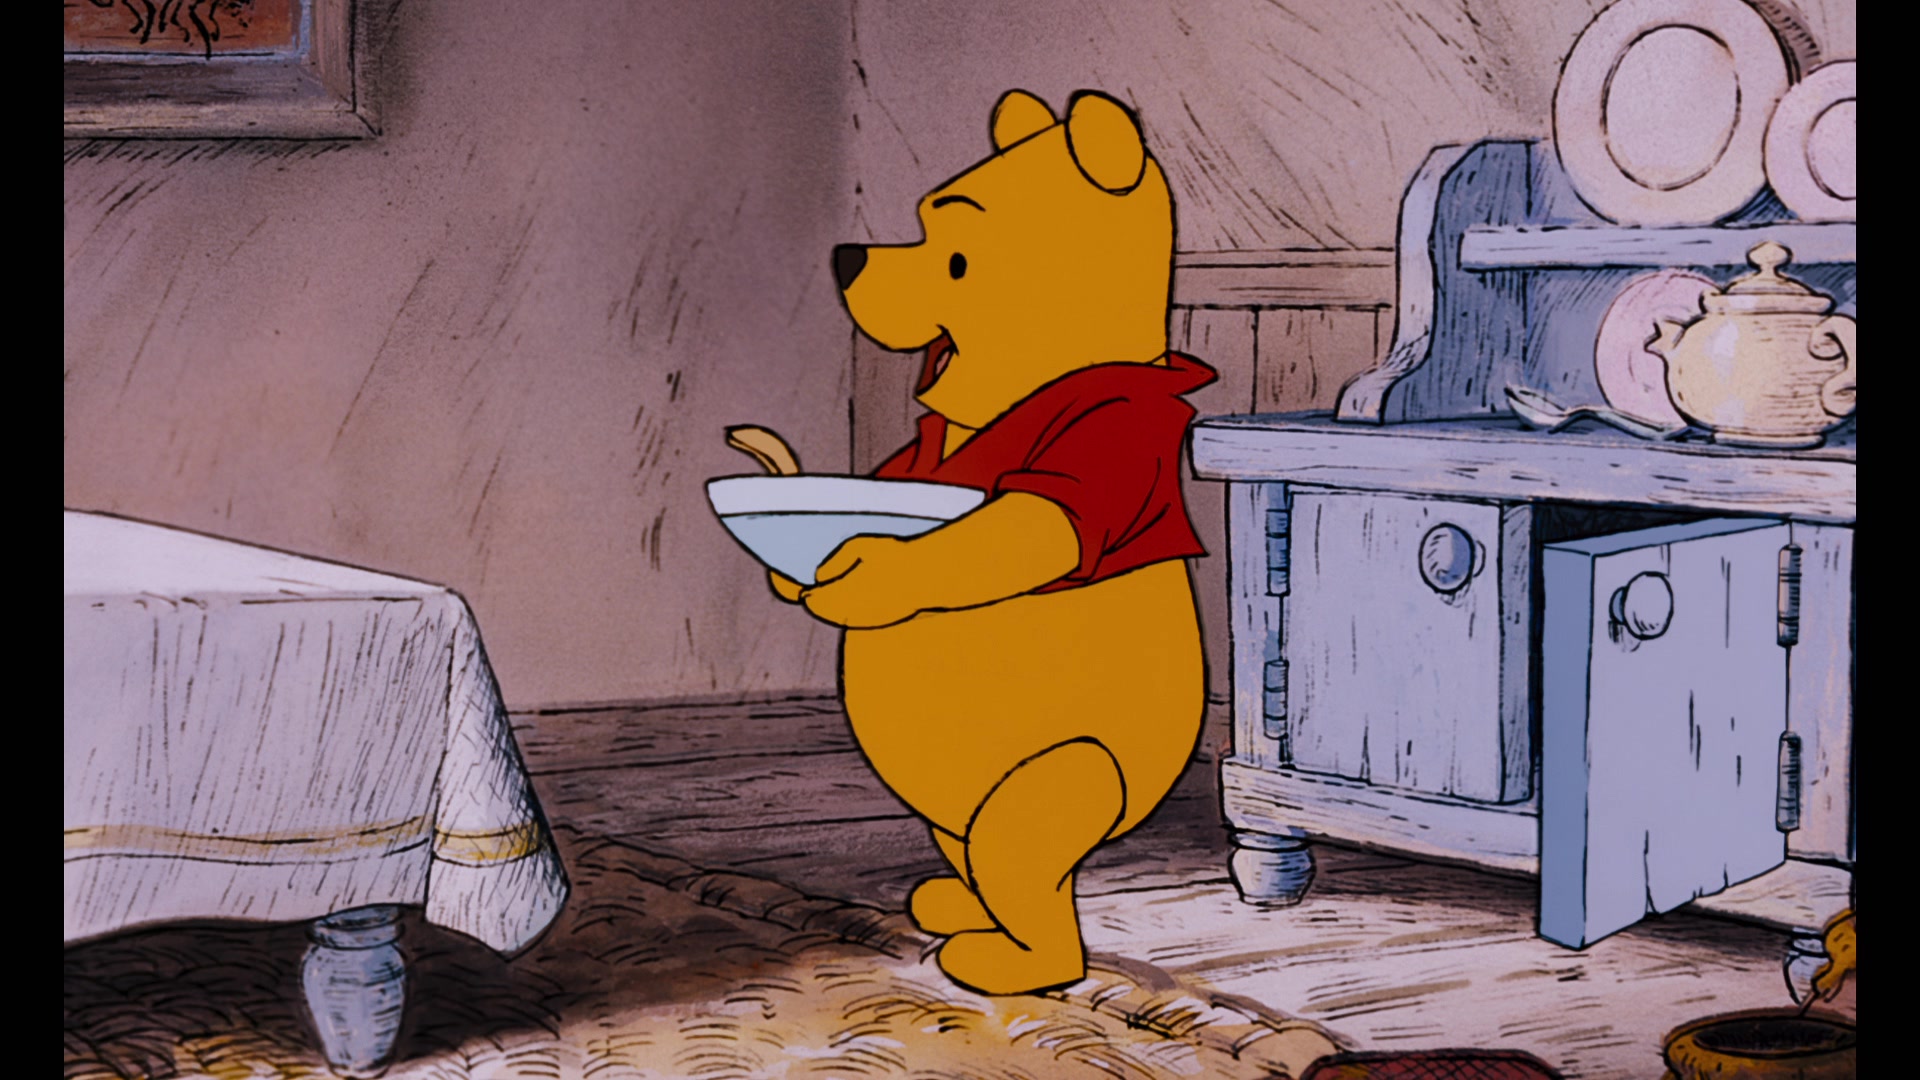 Winnie the pooh adventures. Приключения Винни пуха 1977. Приключения Винни пуха Дисней 1977. Множество приключений Винни-пуха 1977.